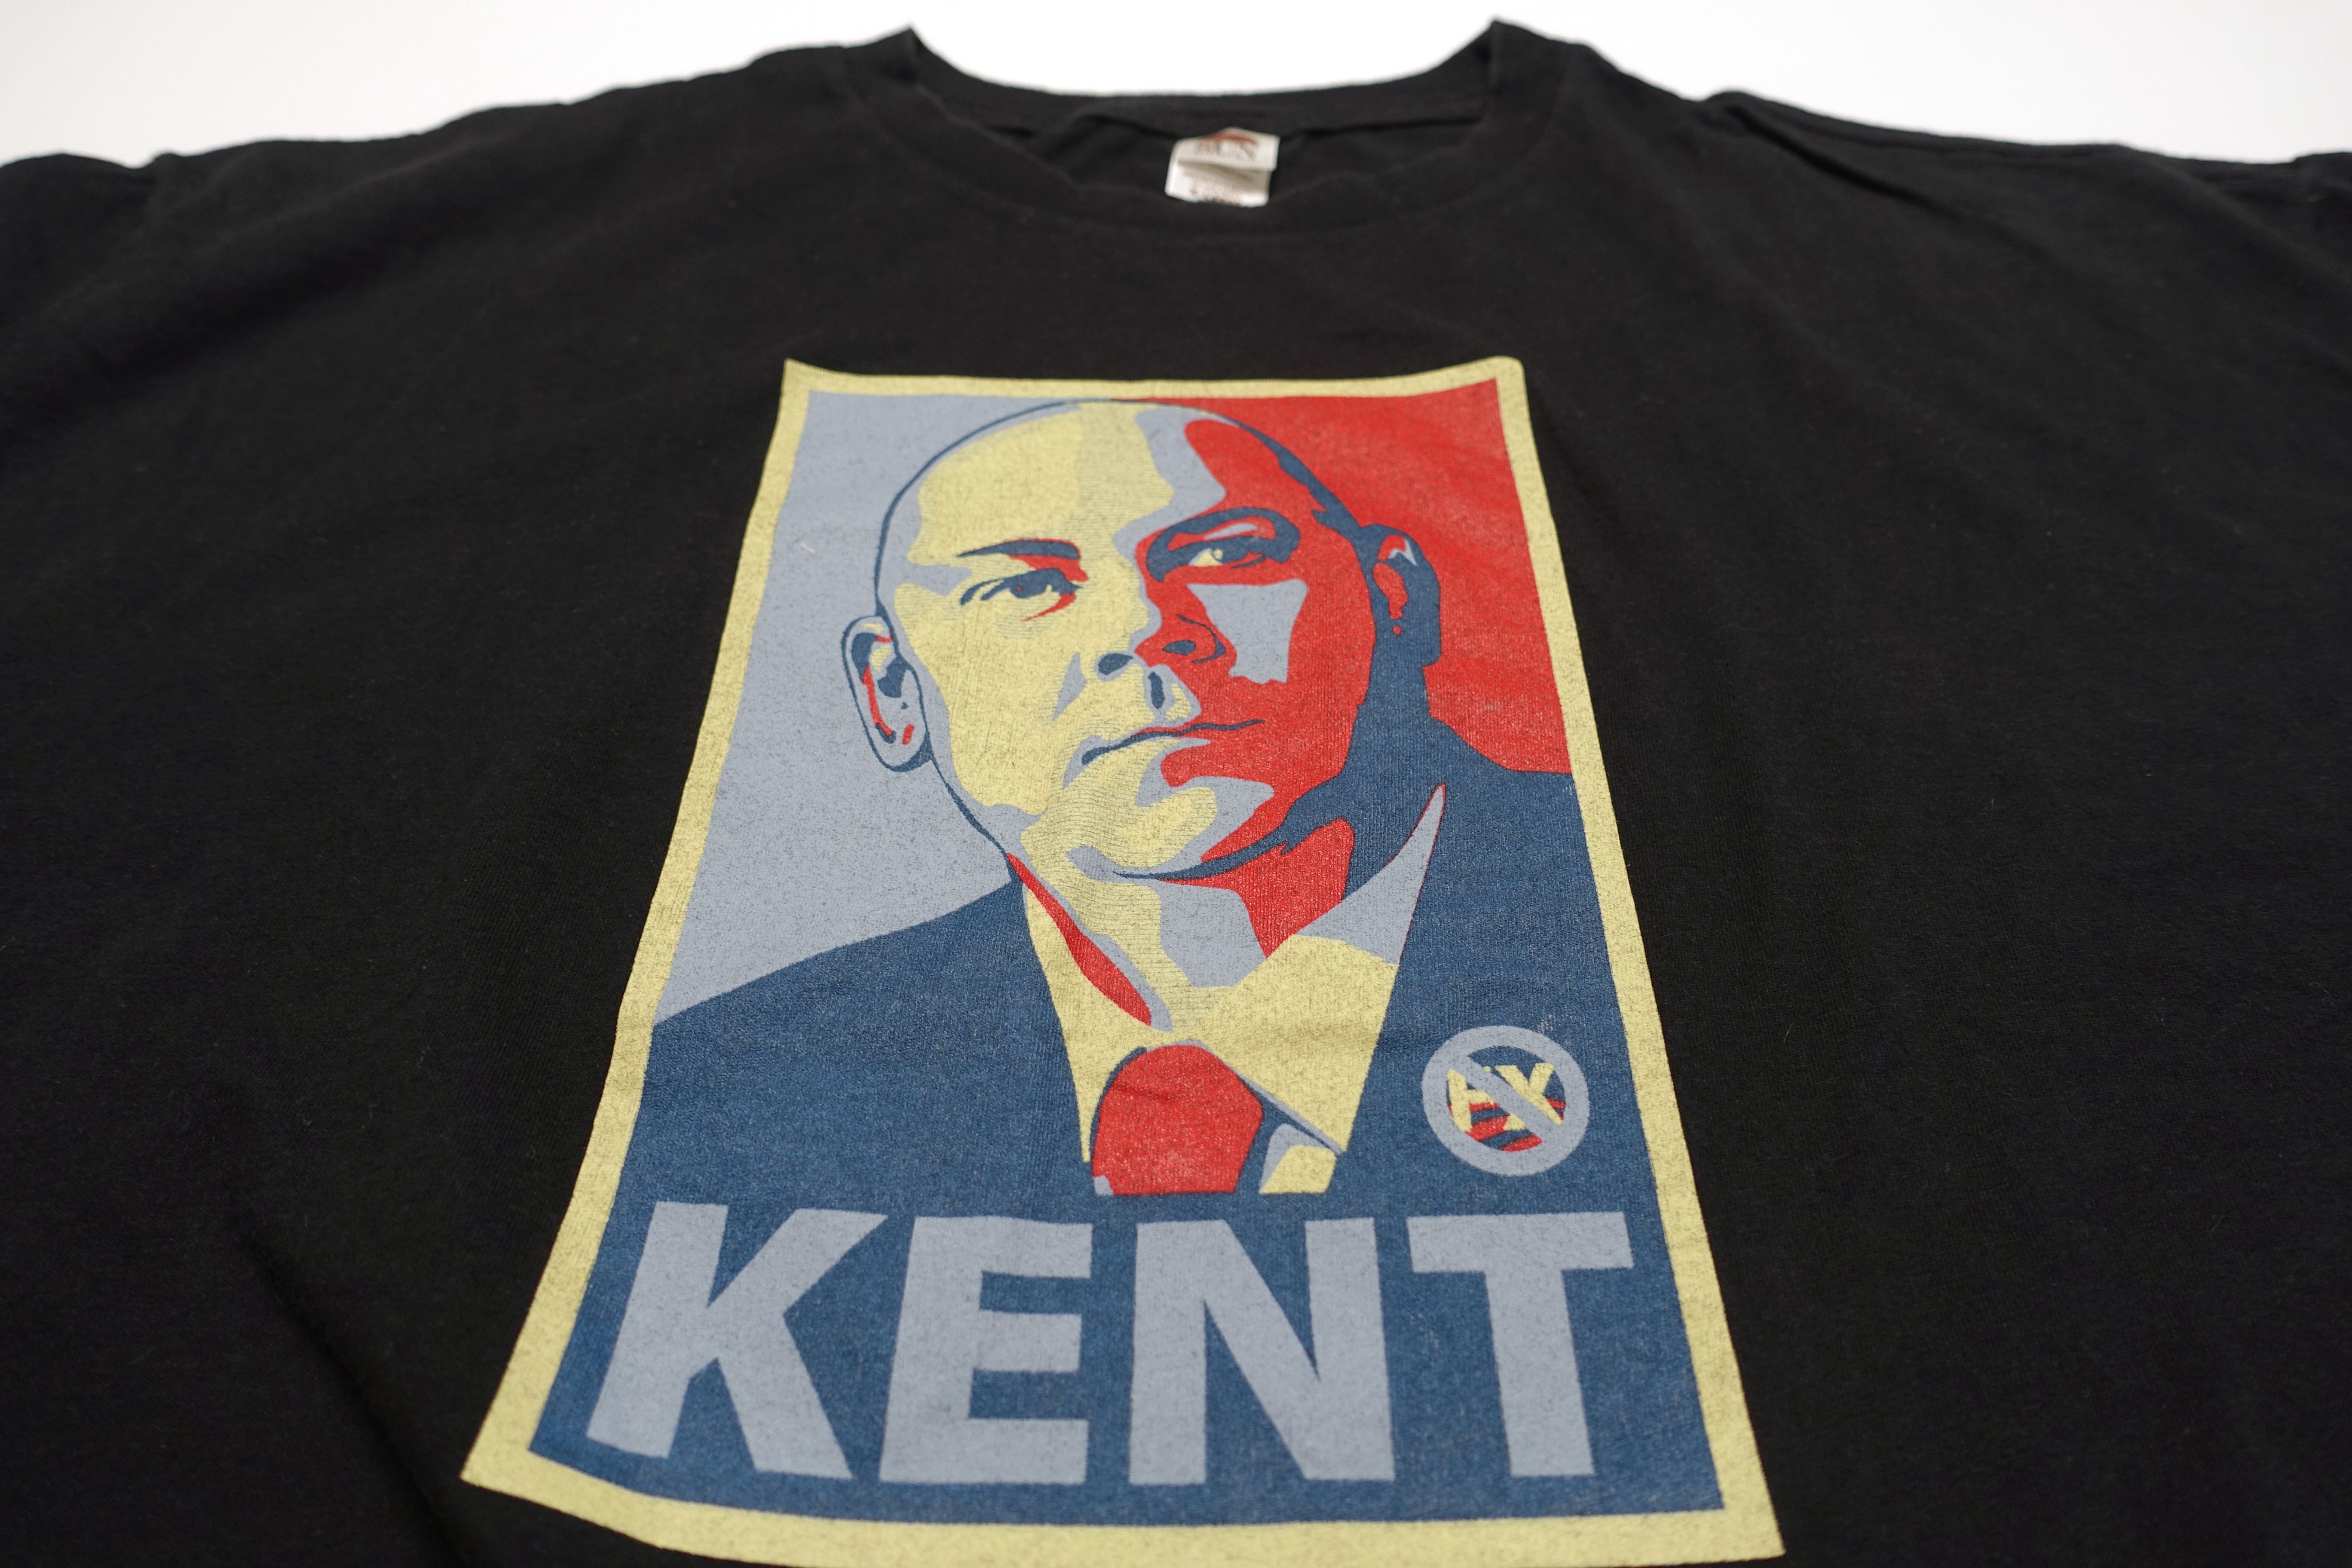 NOFX - Kent For President Tour Shirt Size XL